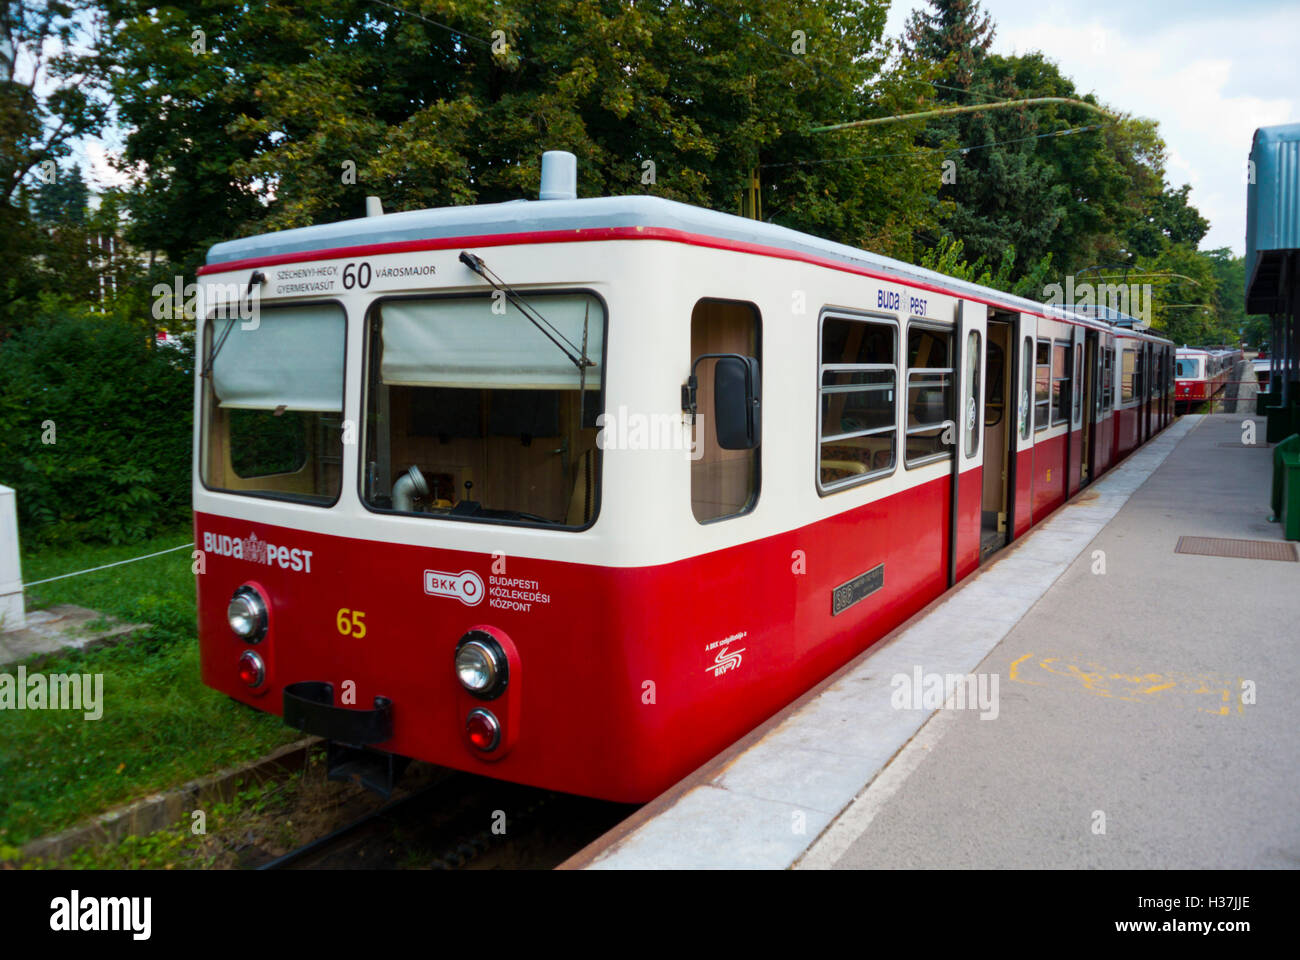 Cog wheel train line 60, Varosmajor, Buda, Budapest, Hungary, Europe Stock Photo